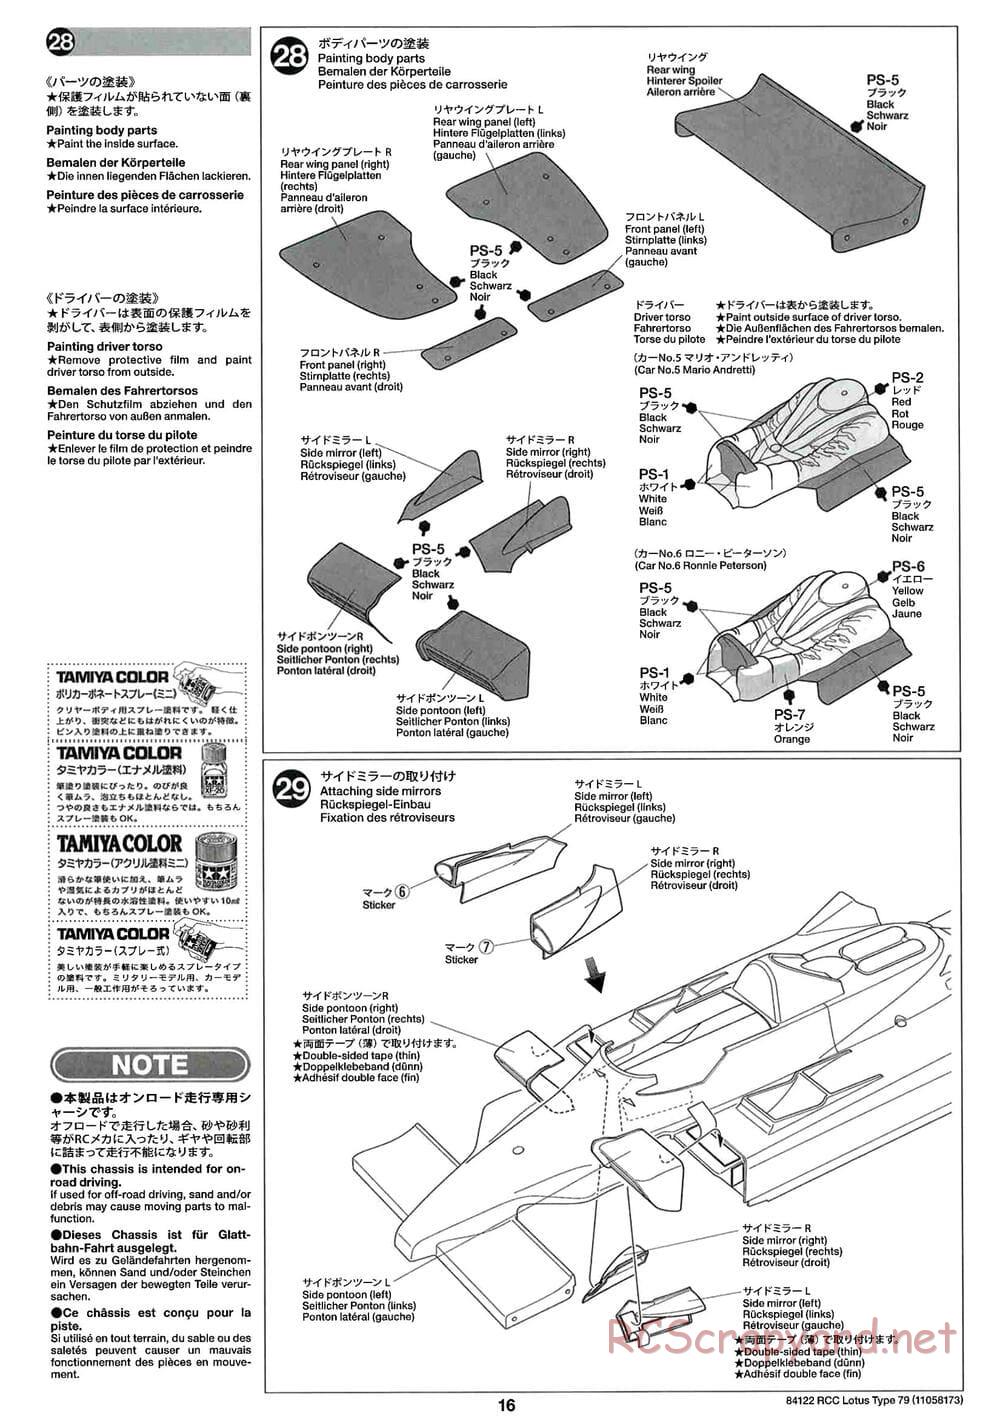 Tamiya - Lotus Type 79 - F104W Chassis - Manual - Page 16